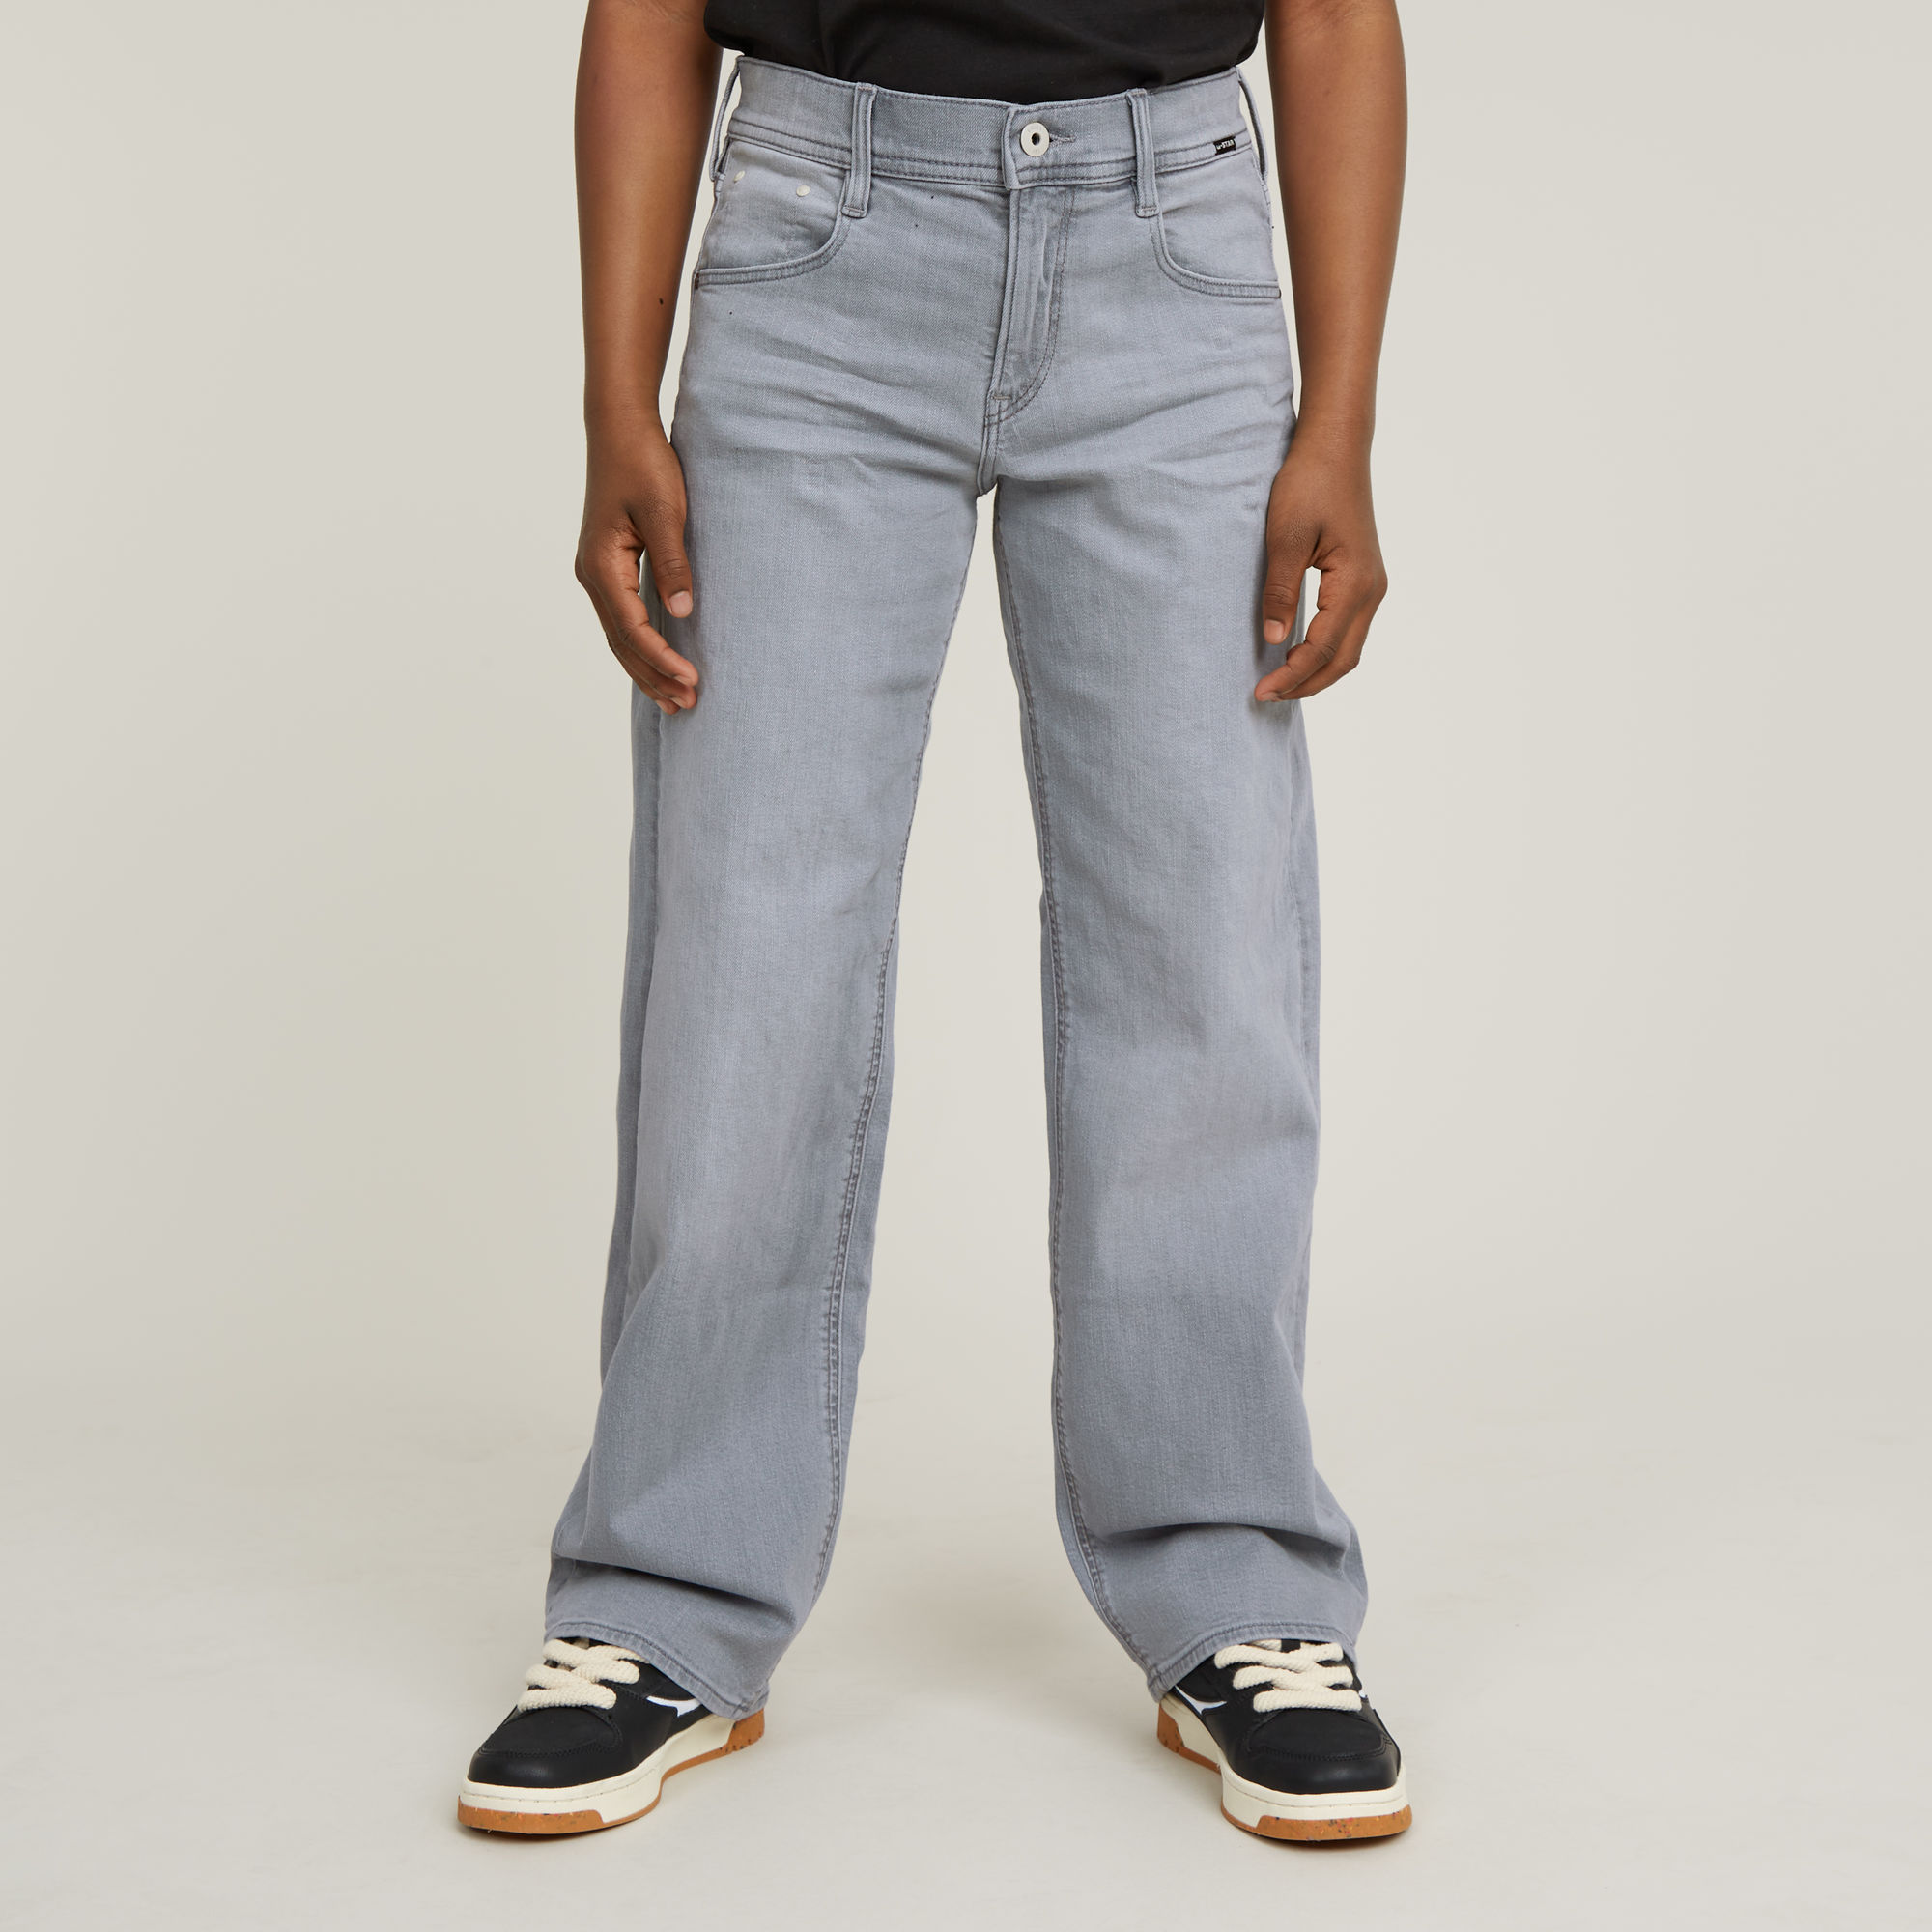 G-Star Raw Judee loose jeans premium high waist straight fit jeans sun faded skyrocket Grijs Meisjes Denim 152